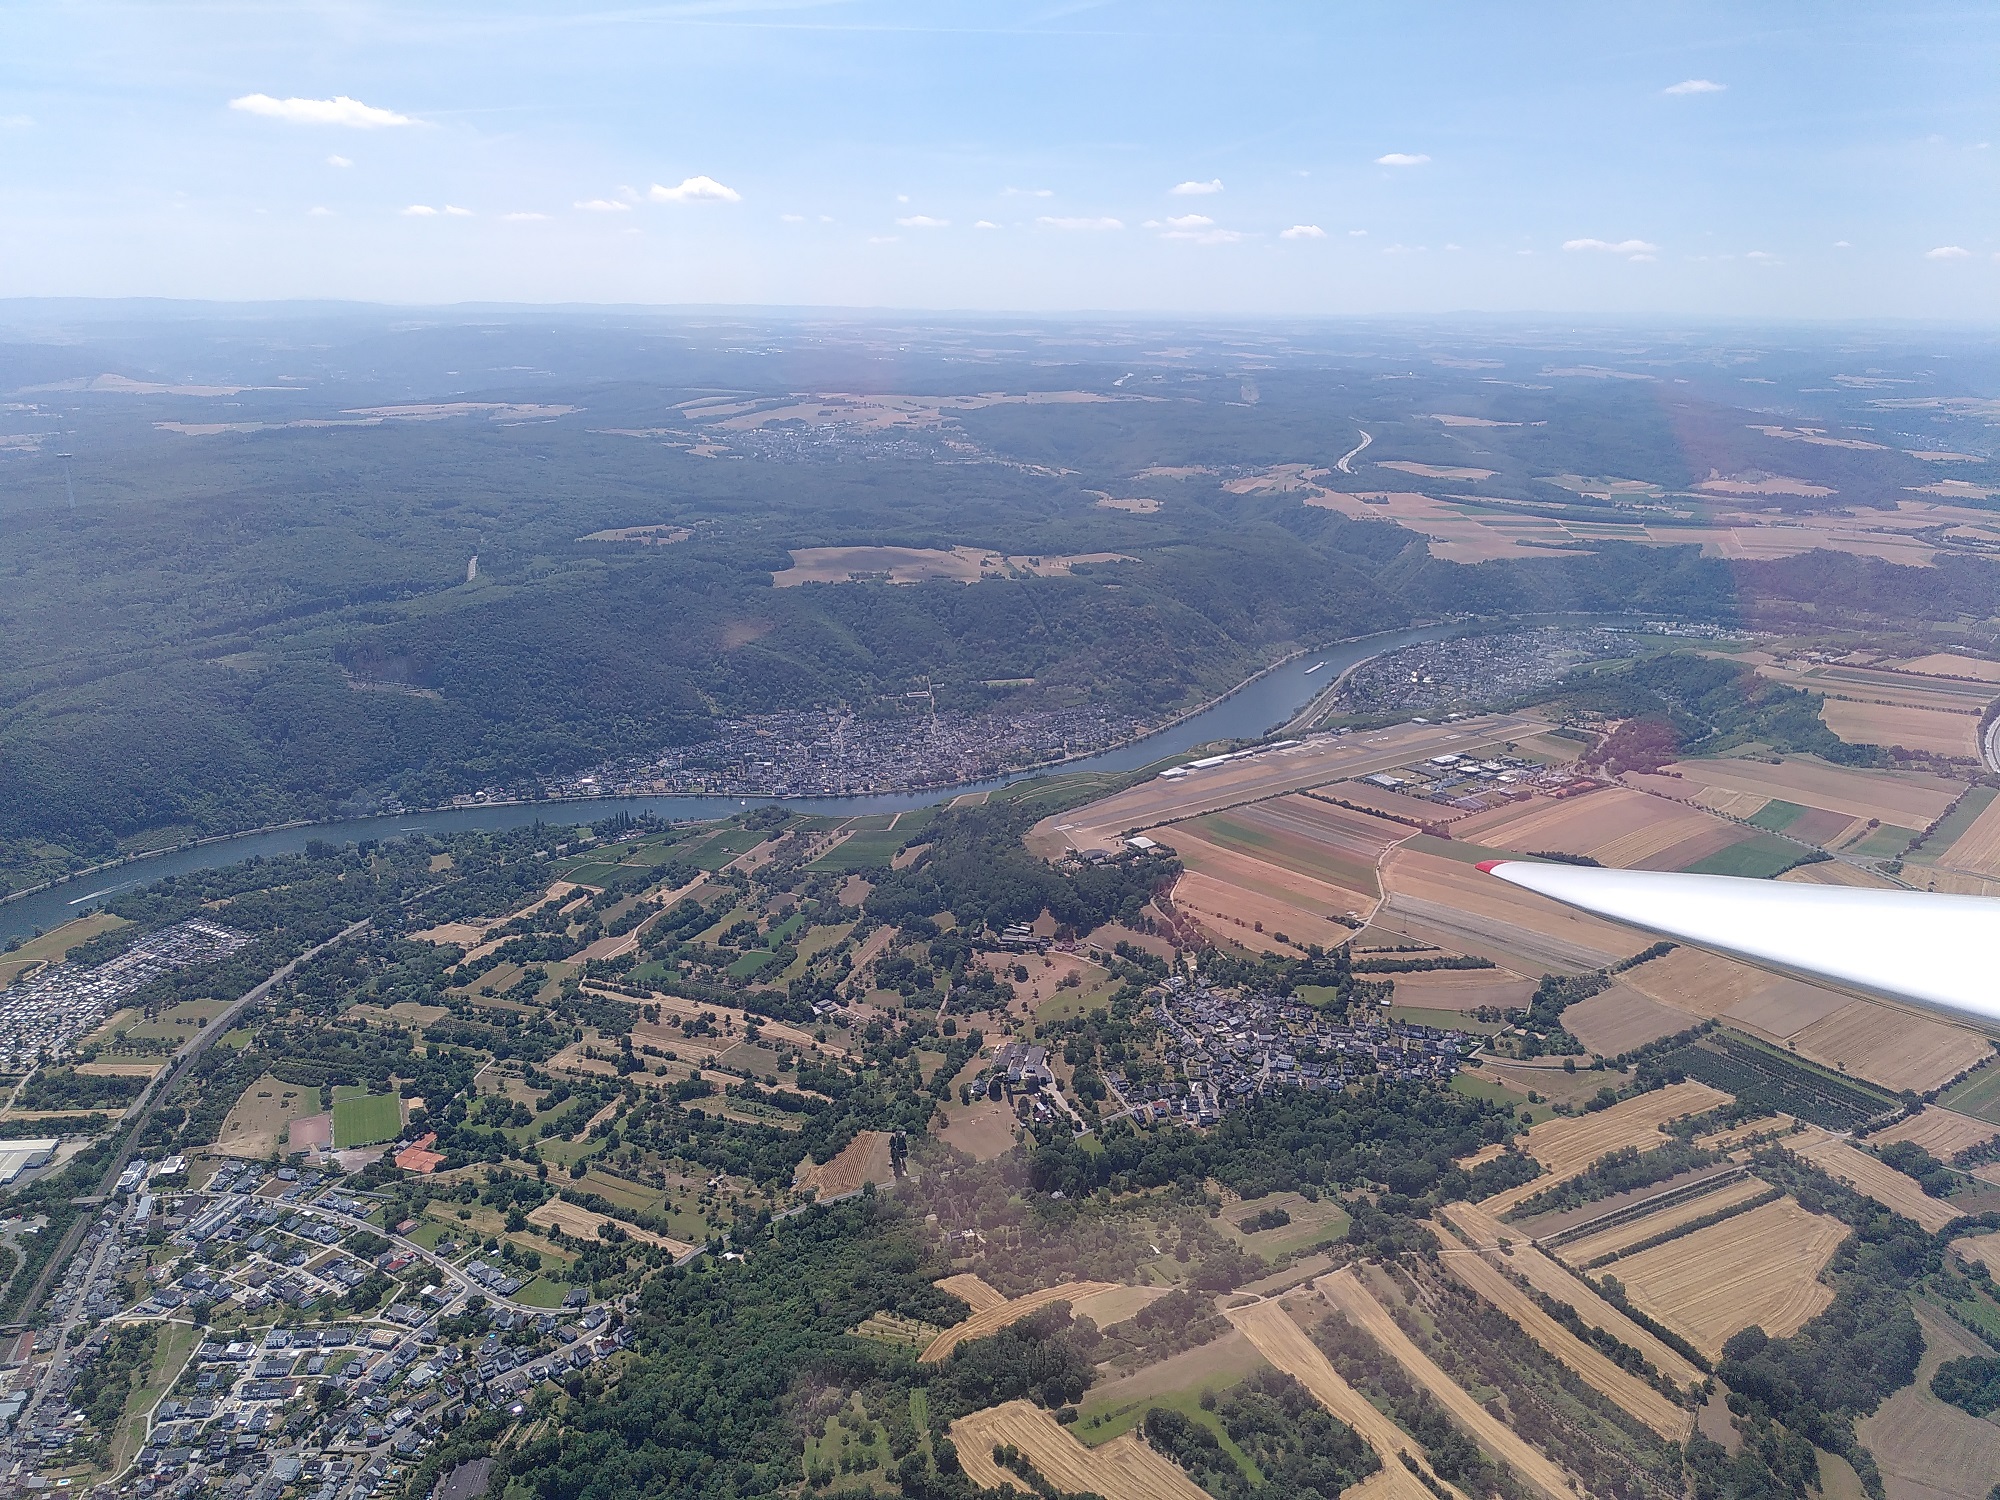 Flugplatz Koblenz-Winningen und Umgebung aus dem Segelflugzeug fotographiert.